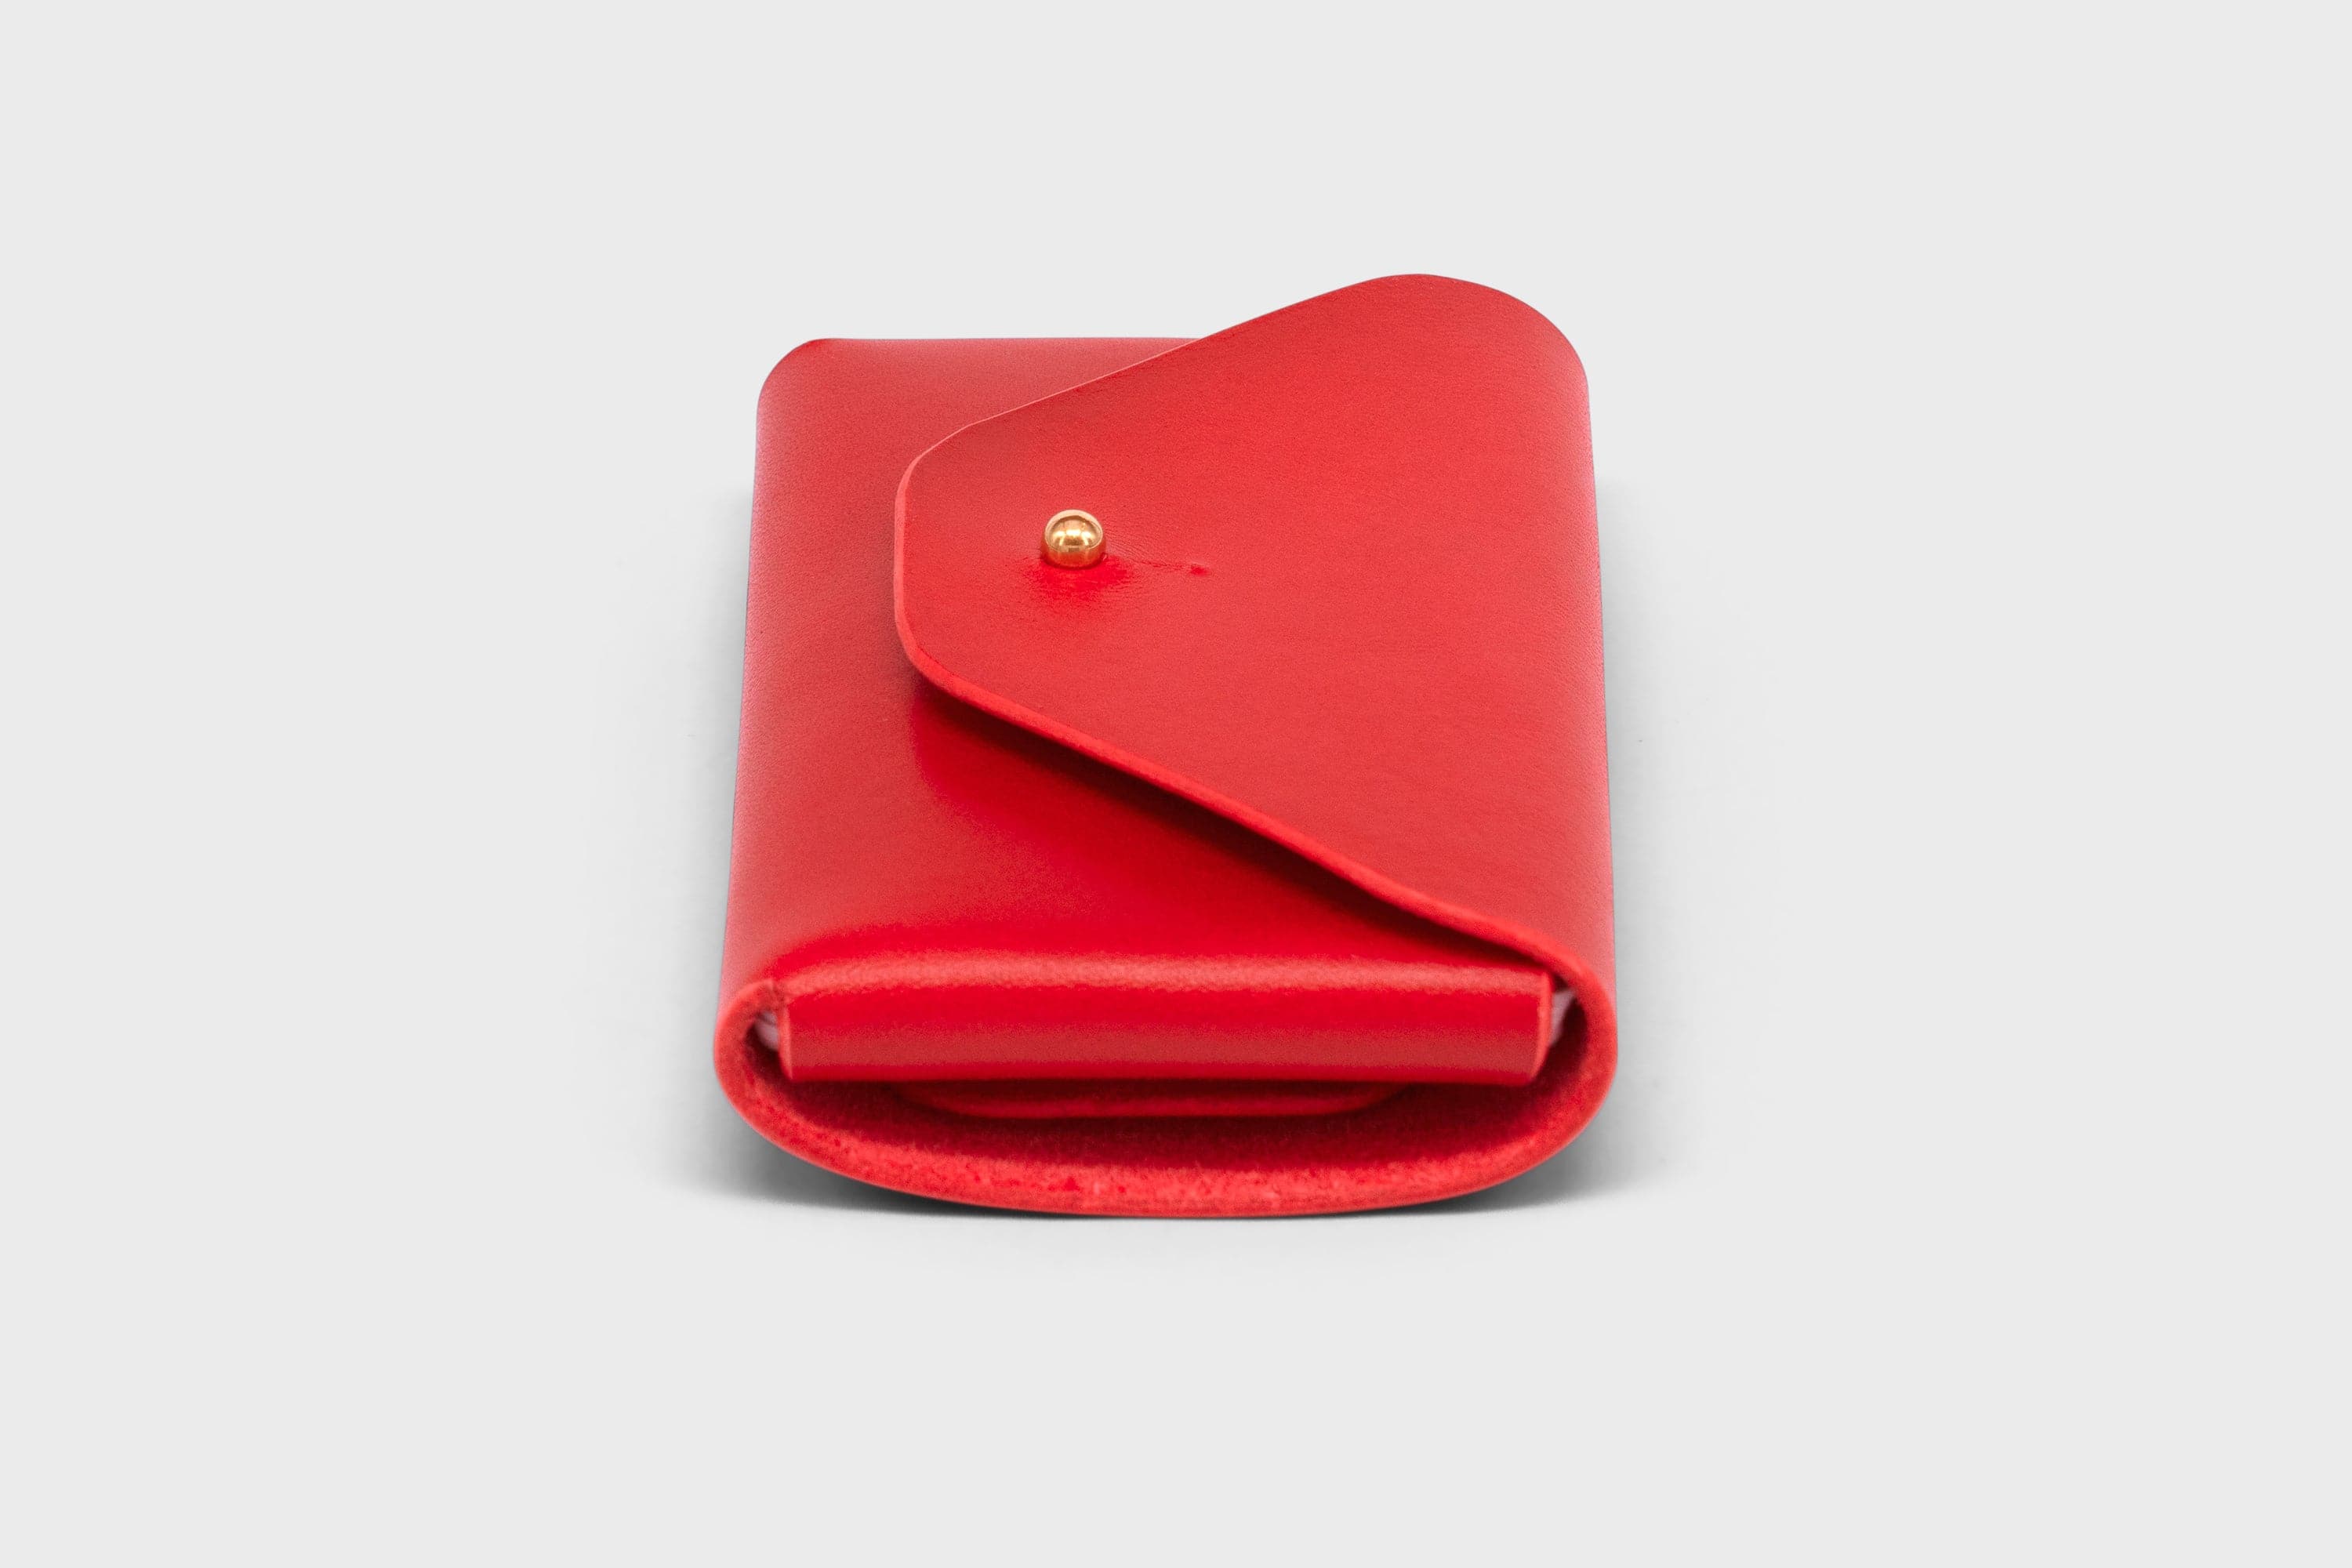 Miniwallet Red Leather Origami Design By Manuel Dreesmann Atelier Madre Barcelona